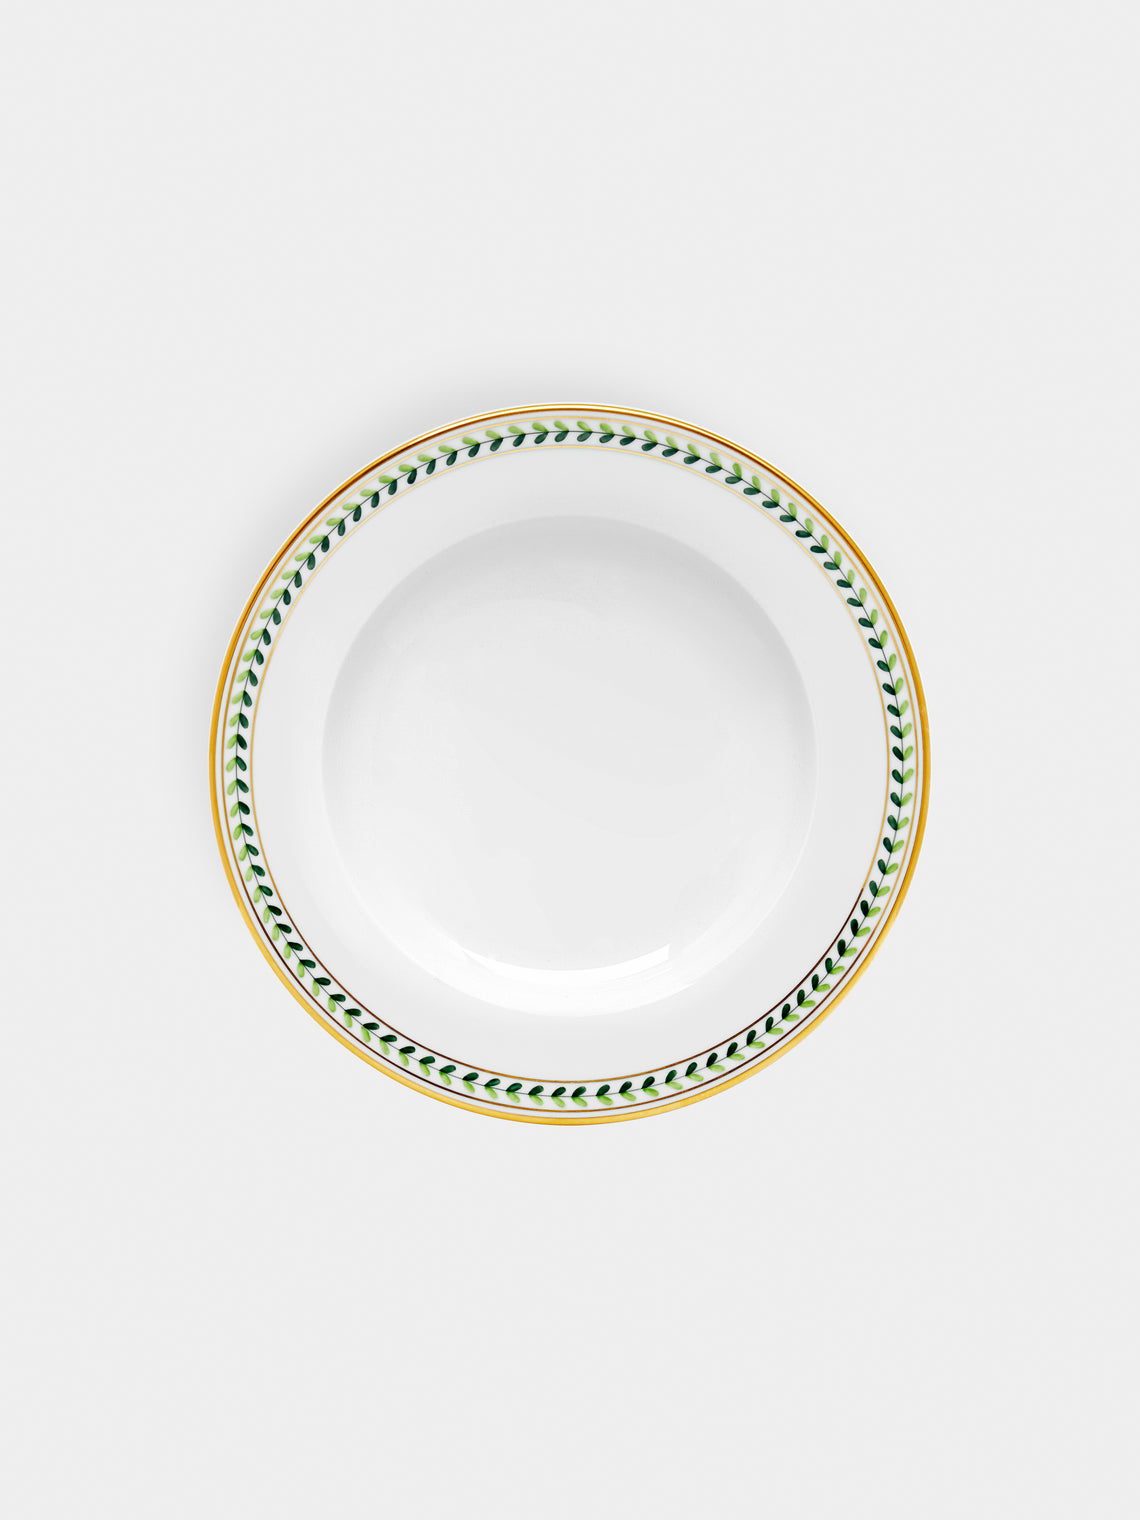 Augarten - Leafed Edge Hand-Painted Porcelain Dessert Plate - White - ABASK - 